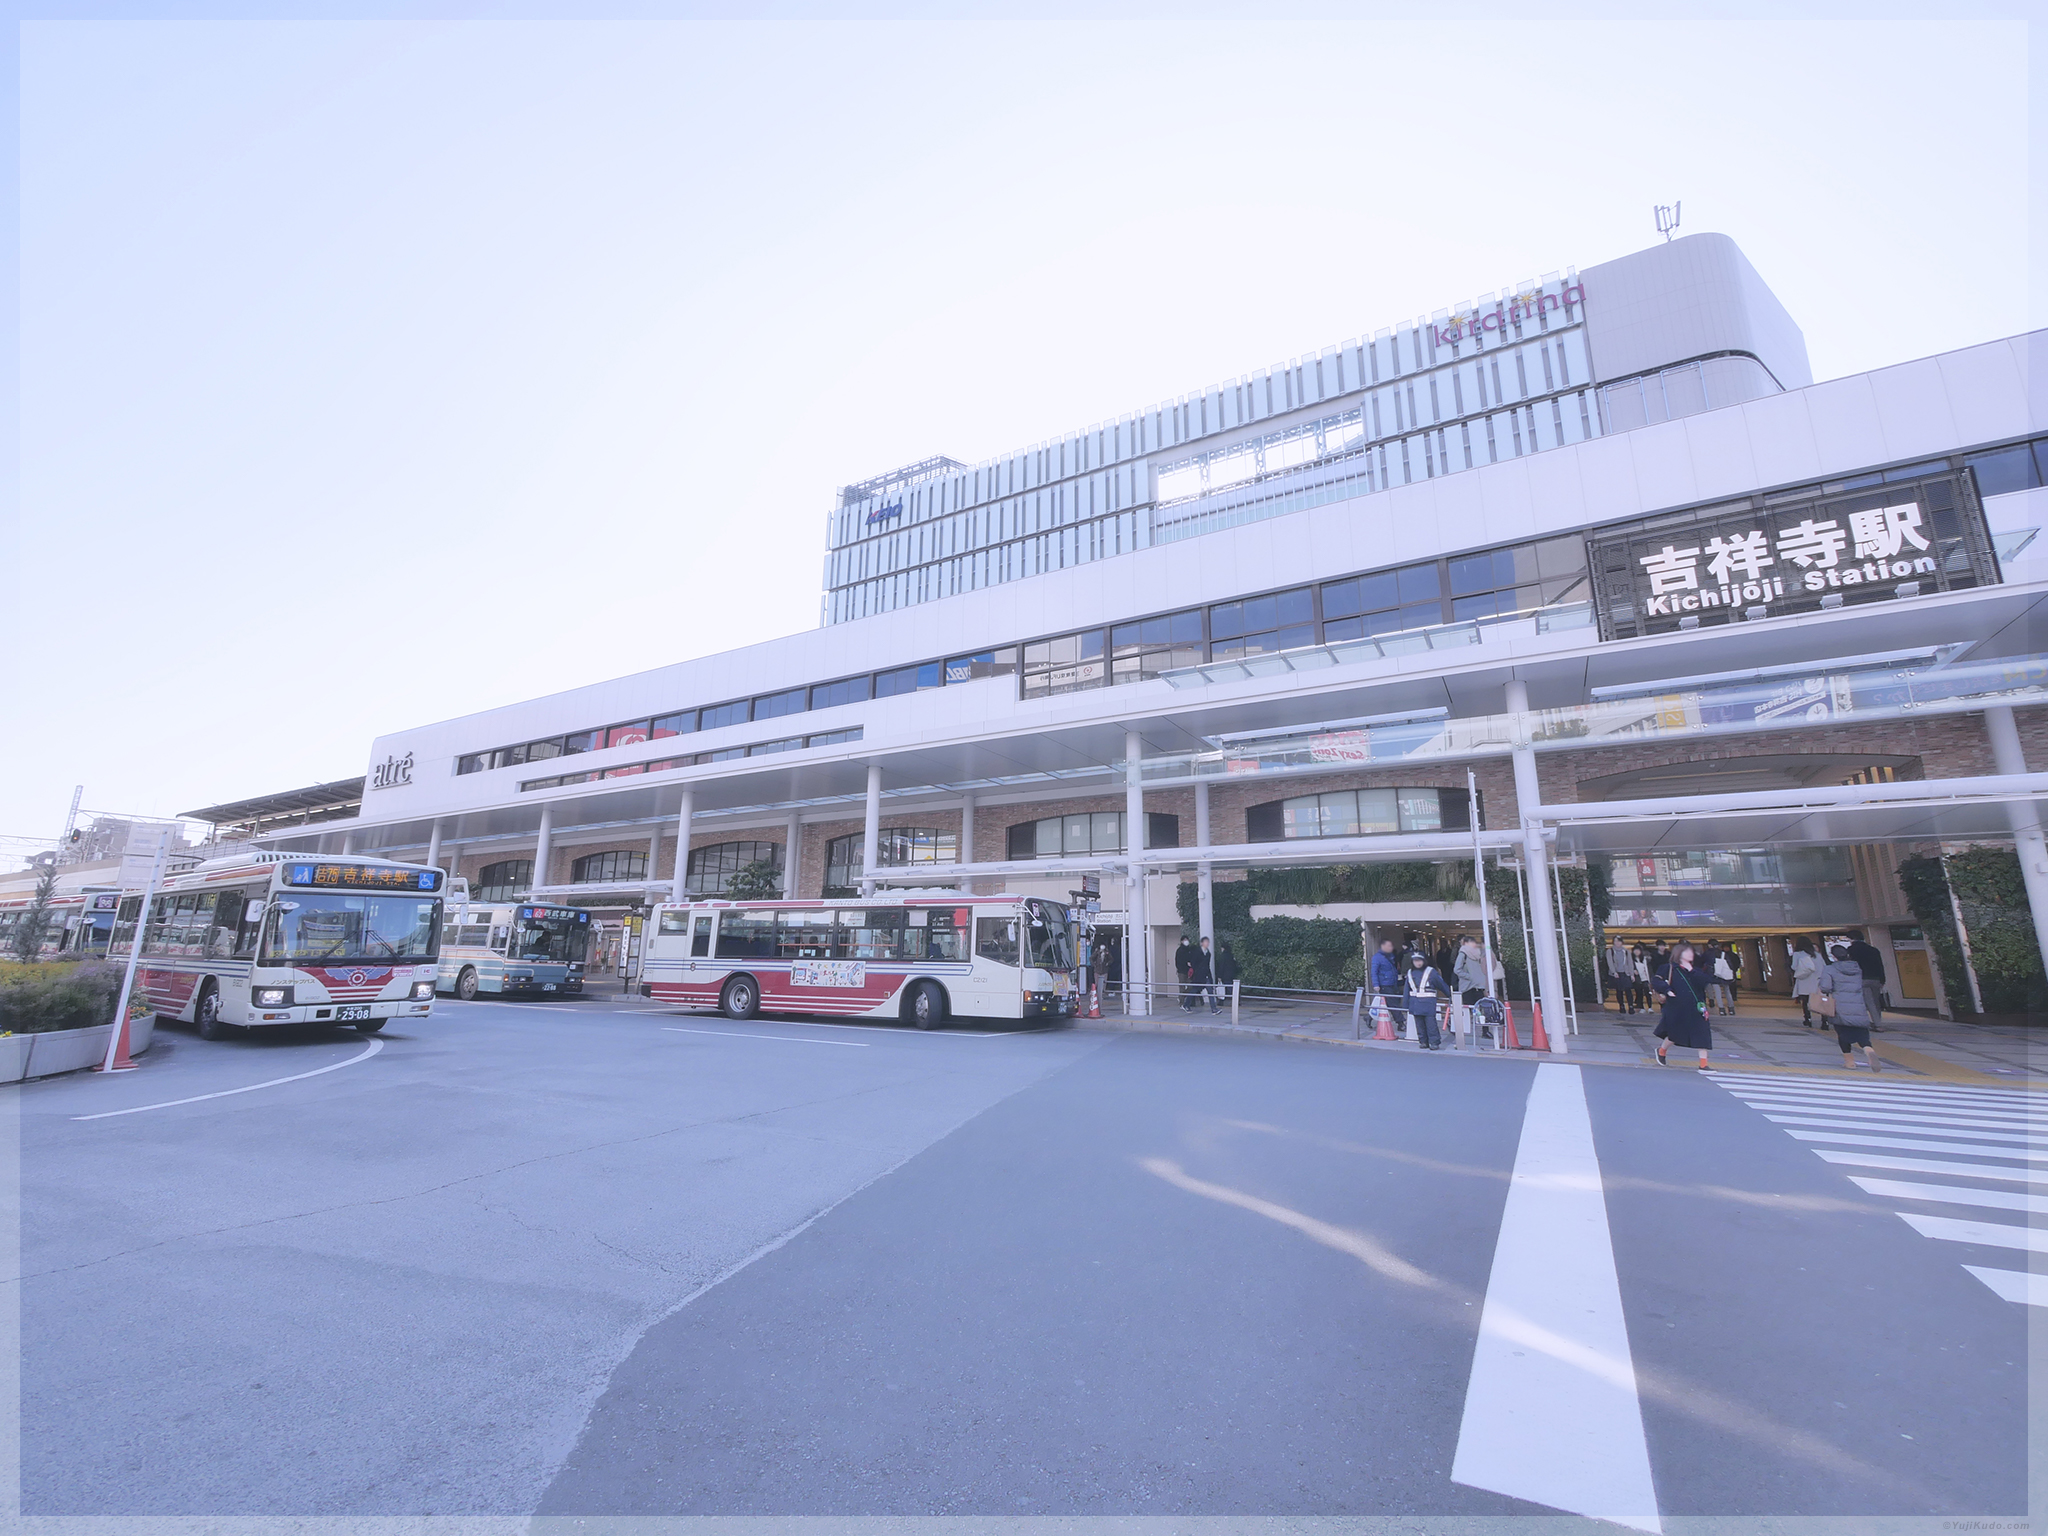 Kichijoji Station – North Exit